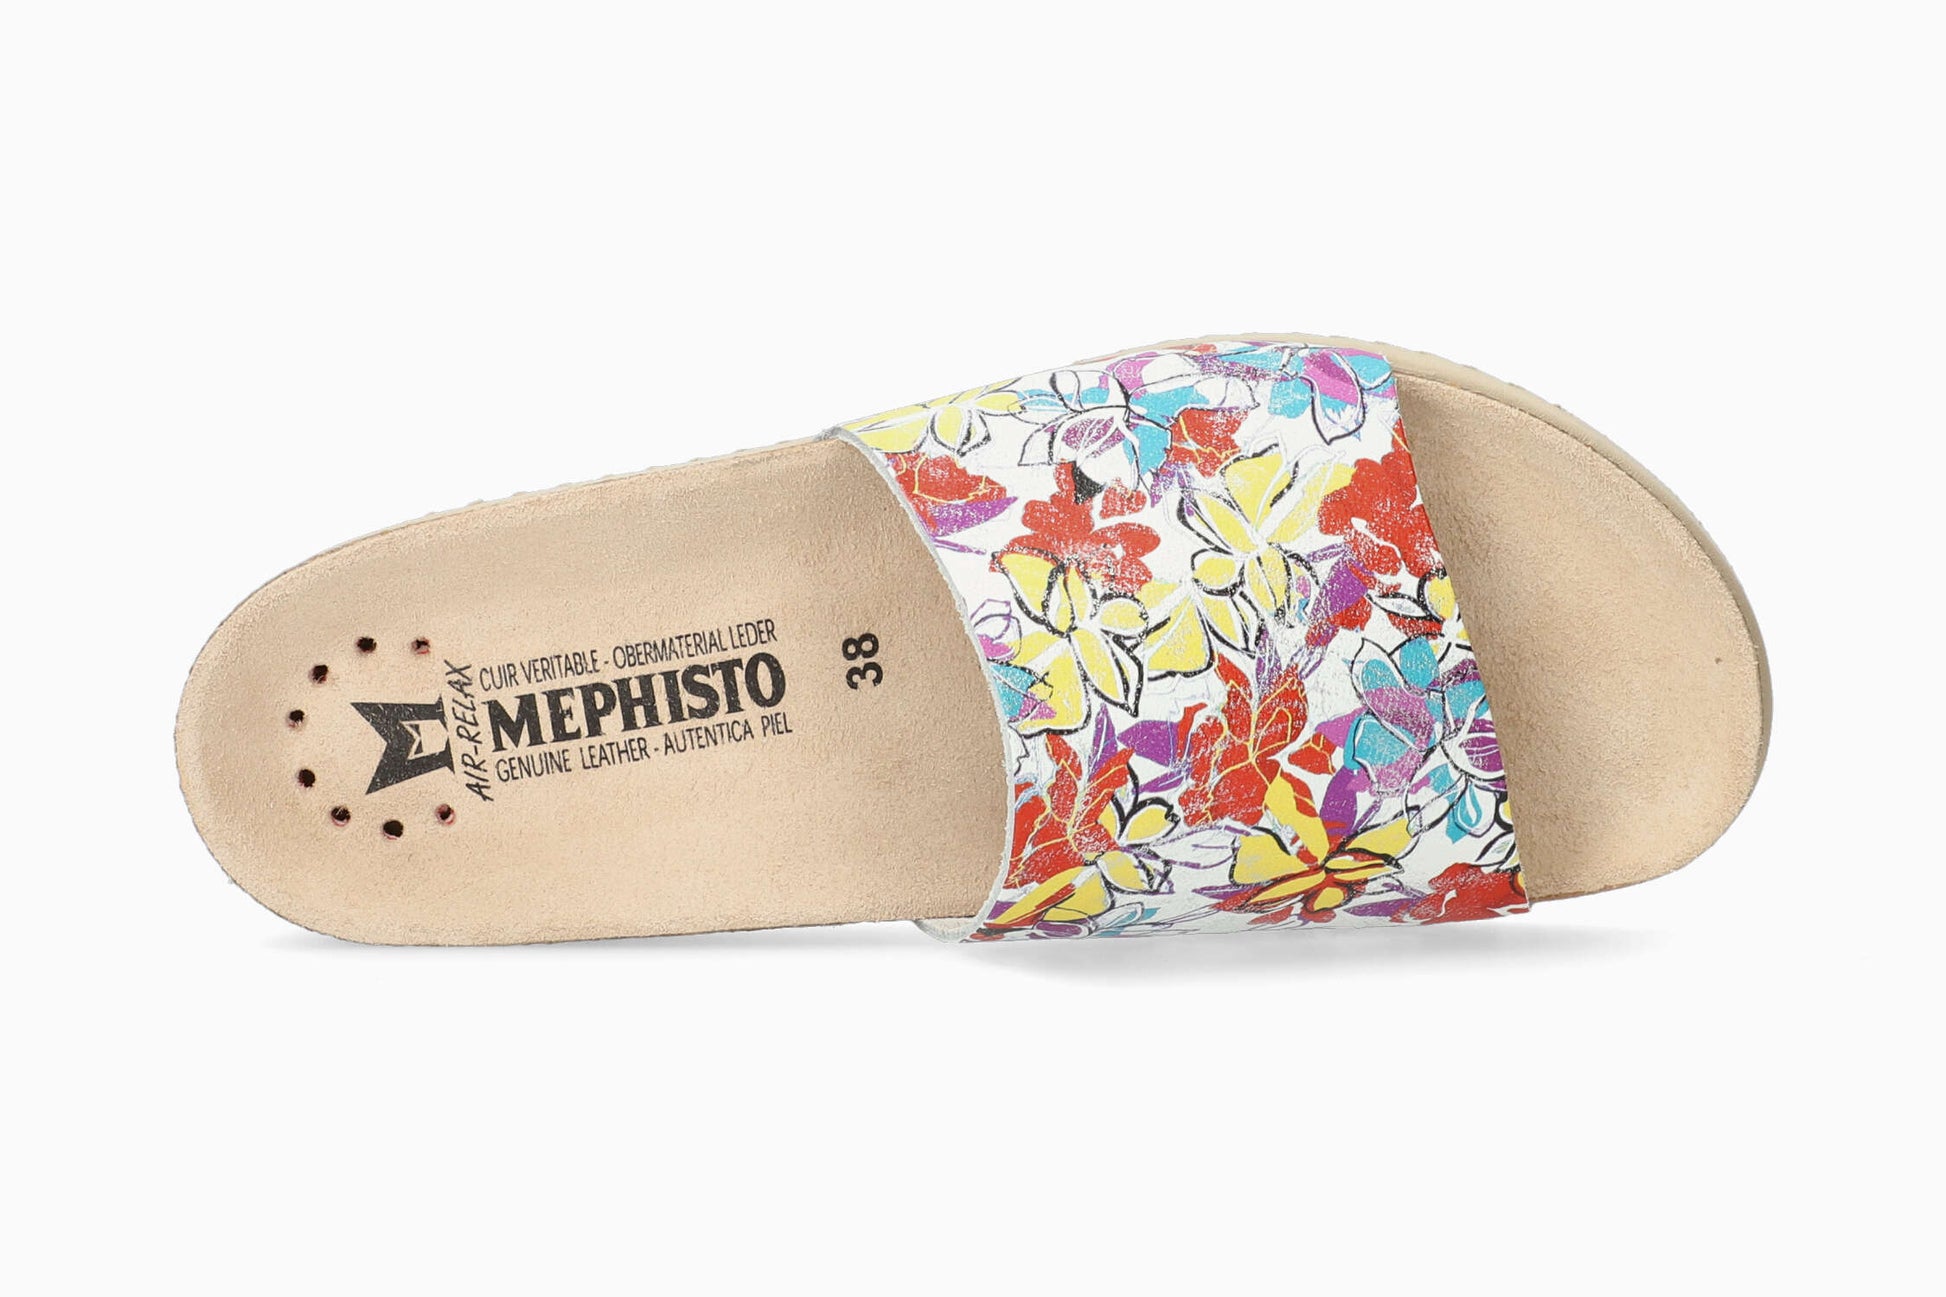 Mephisto Hanik Women's Sandal Multicolored Top